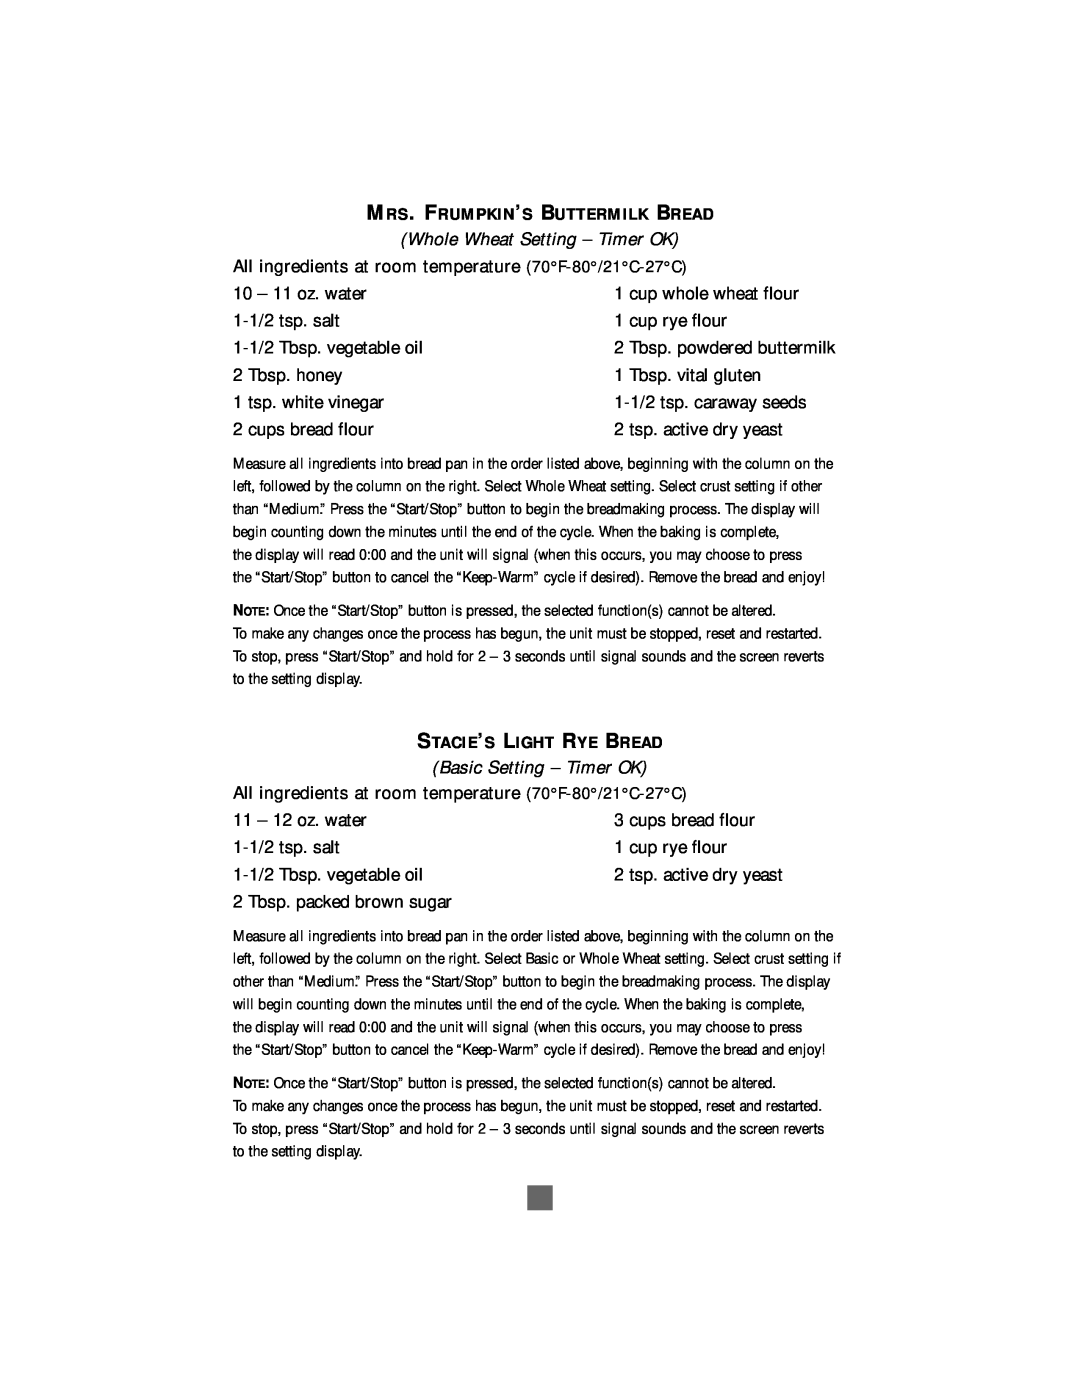 Sunbeam Bread/Dough Maker manual Whole Wheat Setting - Timer OK, Basic Setting - Timer OK, Mrs. Frumpkin’S Buttermilk Bread 